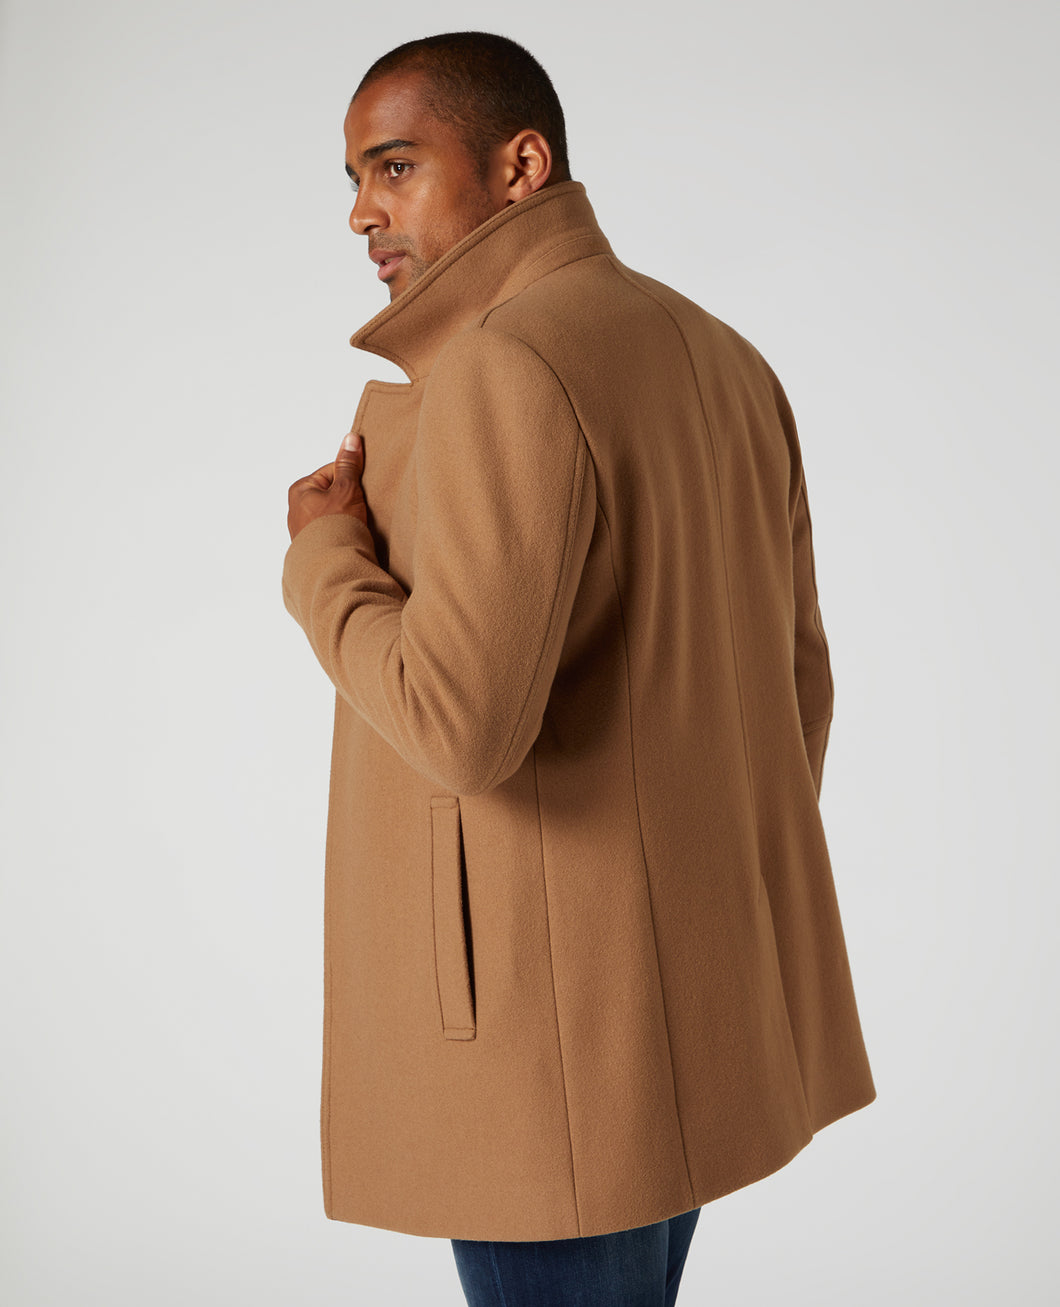 Remus Uomo Tan/Camel Lohman Tailored Coat 90077/56 sand